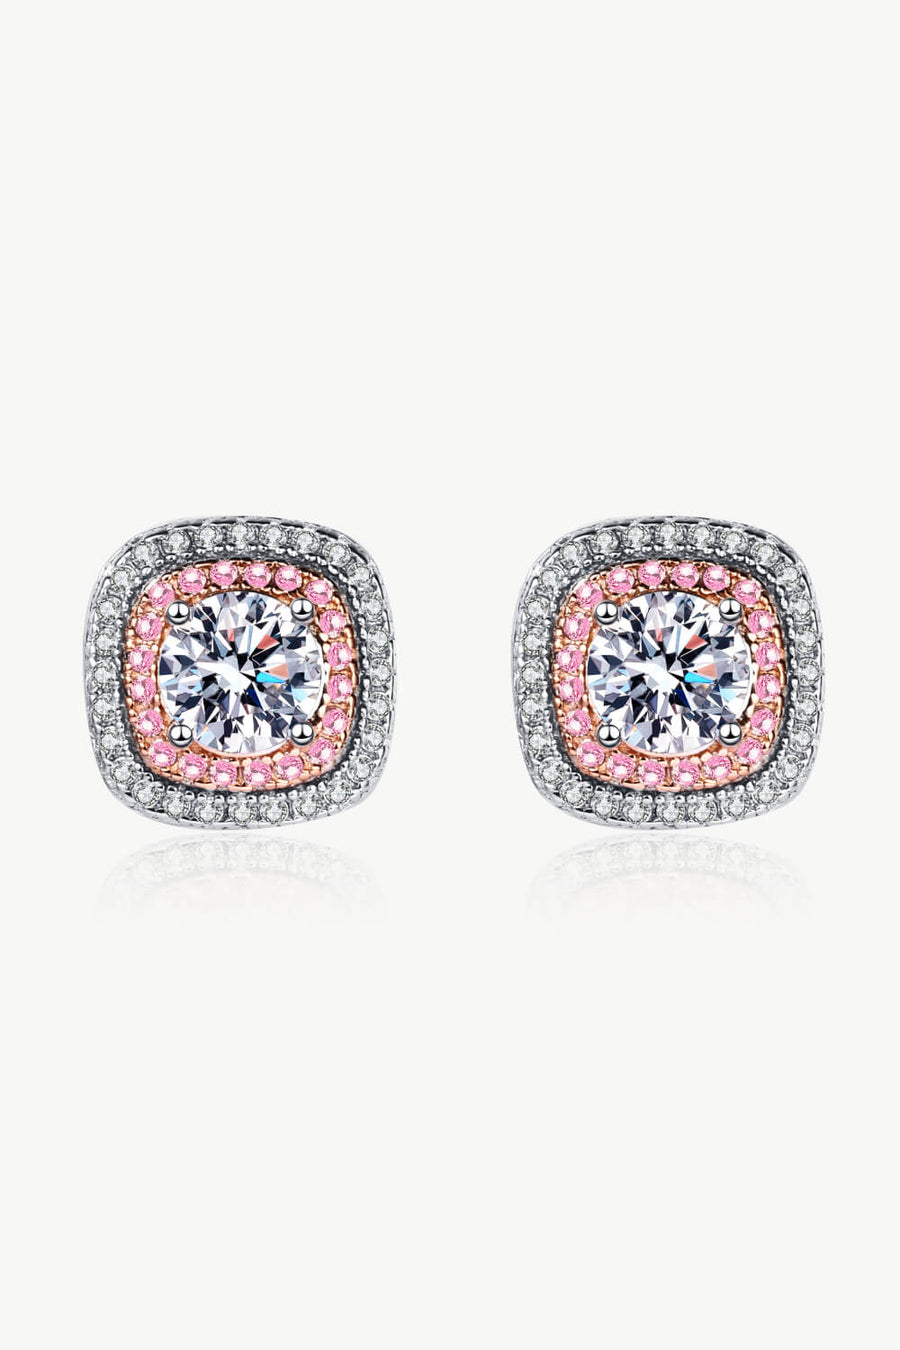 Best Diamond Jewelry Bundle Set Gift | Best Geometric Diamond Necklace, Earrings Jewelry Gift for Women, Mother, Wife, Daughter | MASON New York